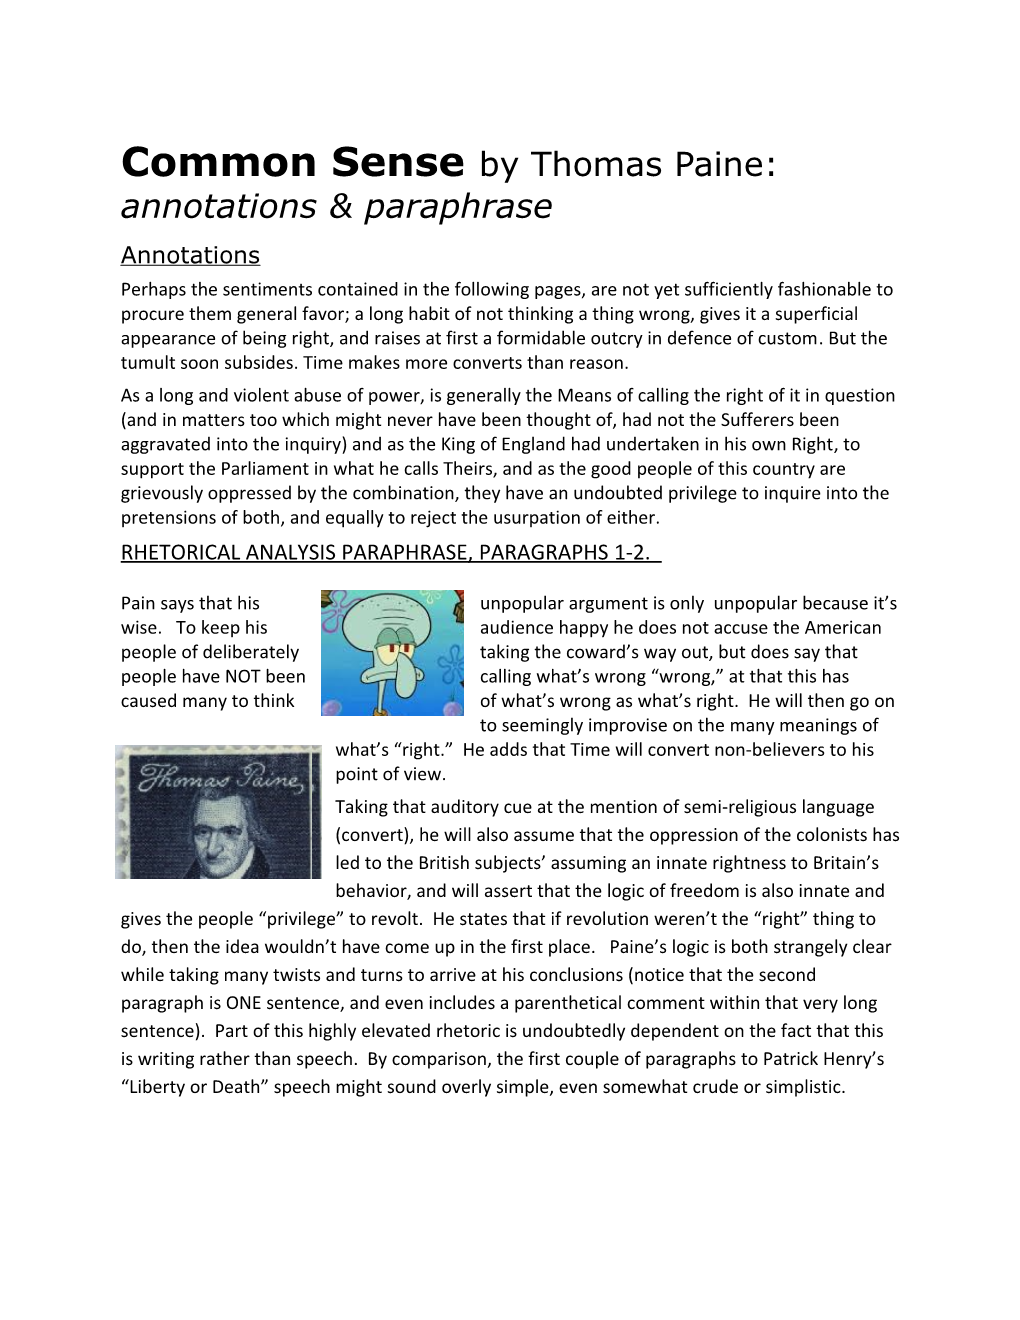 Common Sense by Thomas Paine: Annotations & Paraphrase